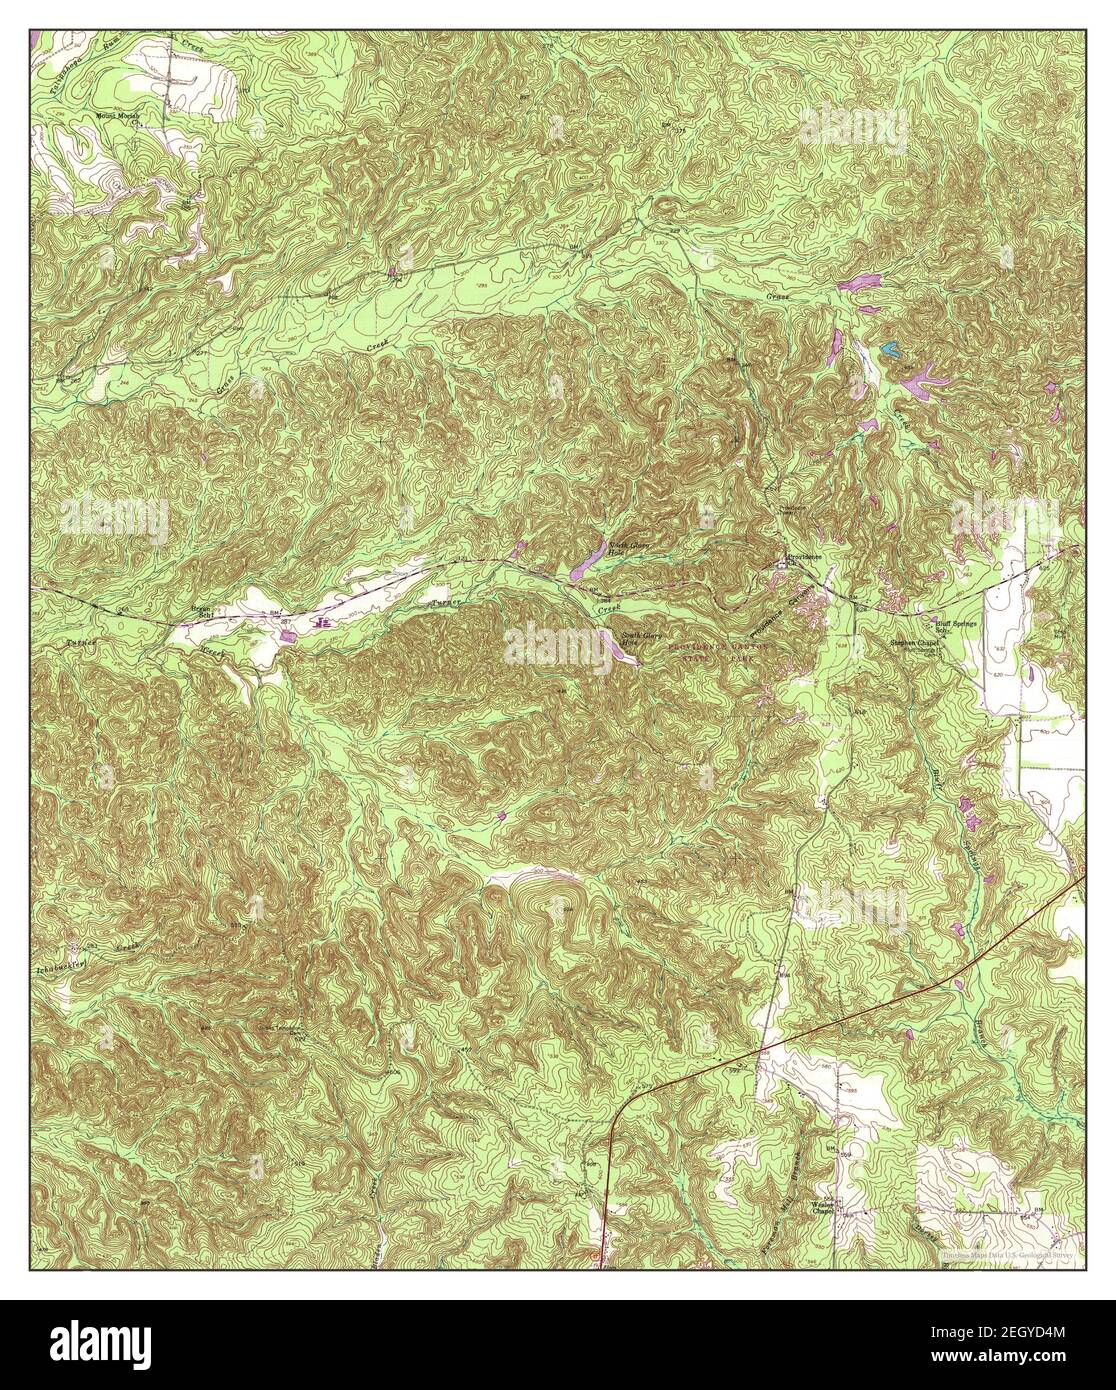 Lumpkin SW, Georgia, map 1955, 1:24000, United States of America by Timeless Maps, data U.S. Geological Survey Stock Photo